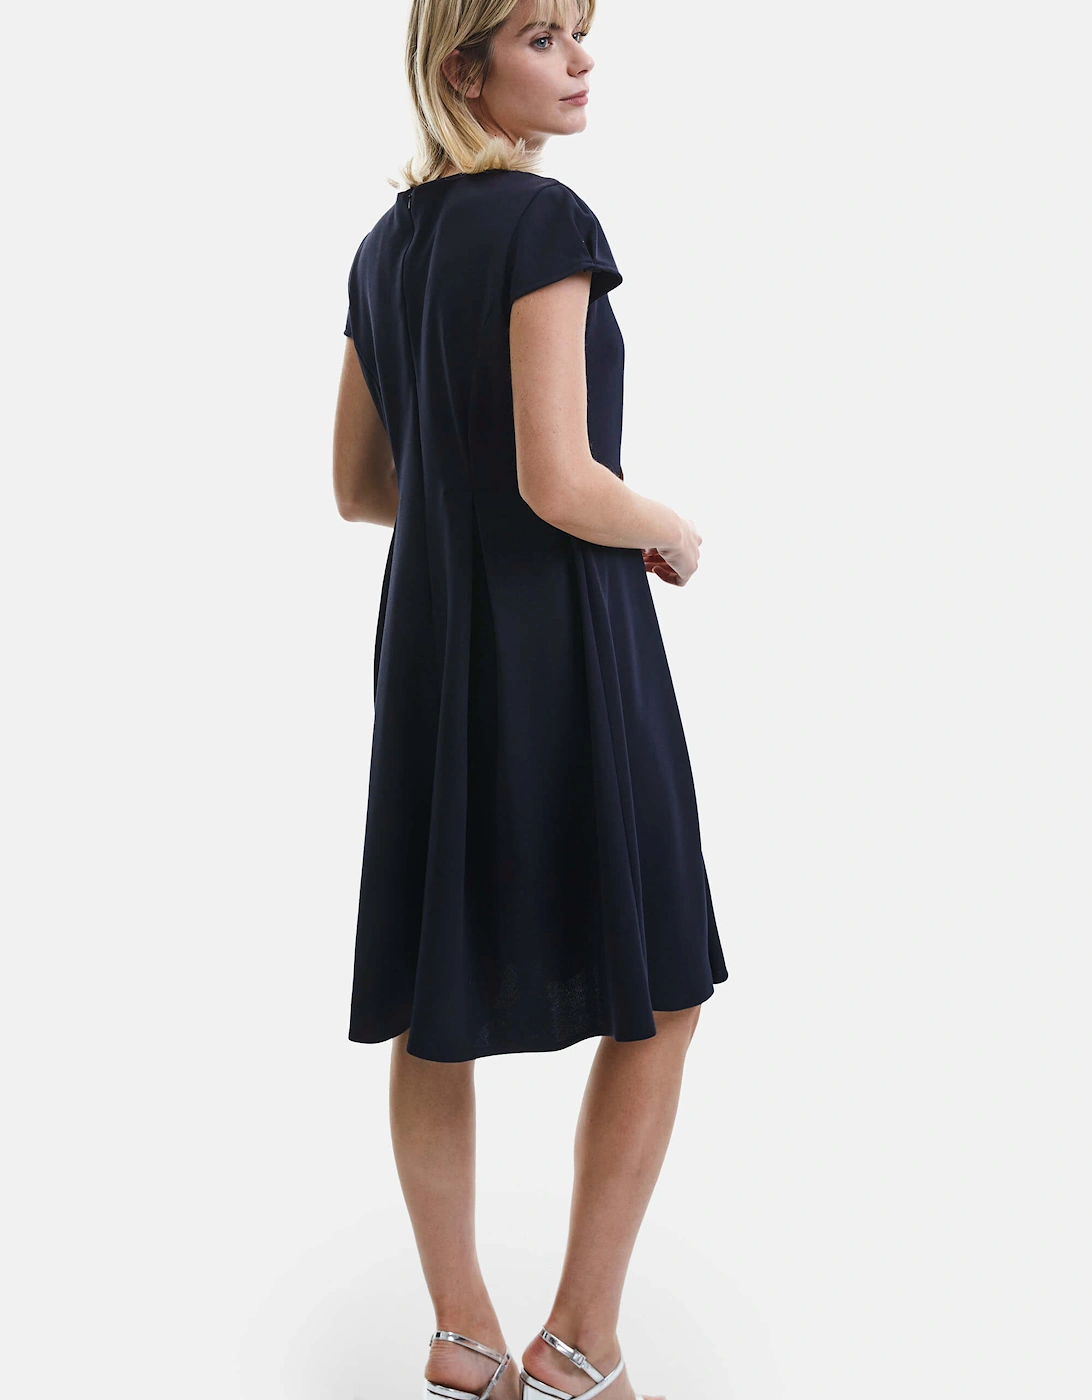 Pin Tuck Detail Knee Length Dress